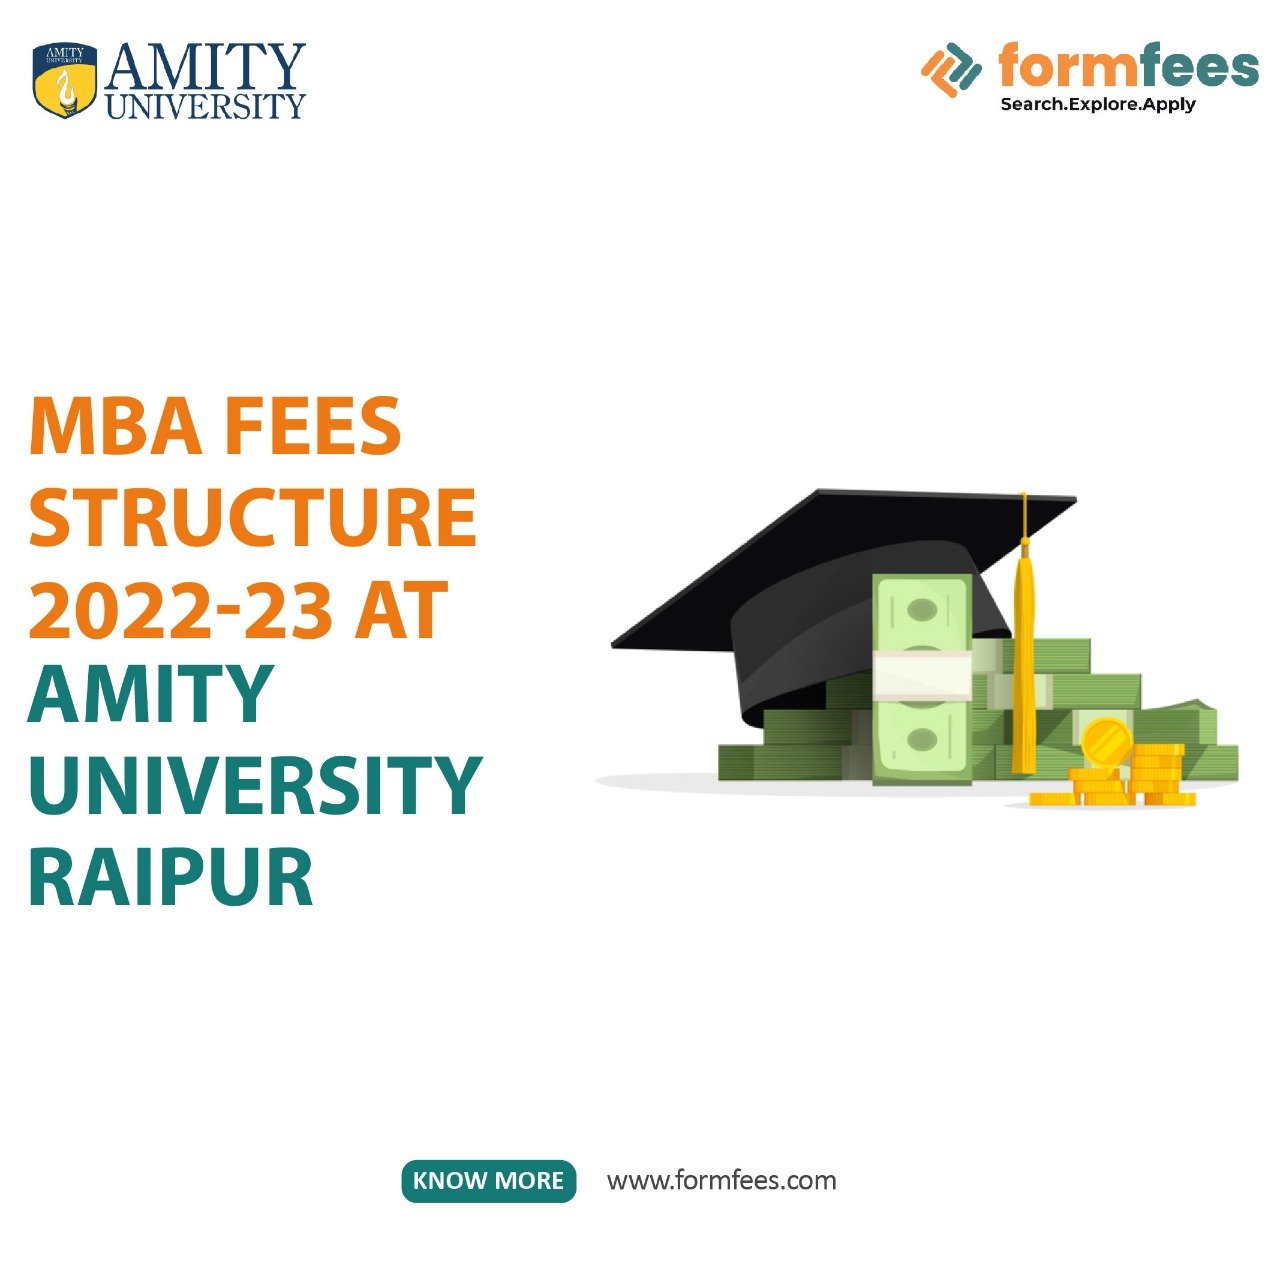 MBA Fees Structure 202223 at Amity University Raipur